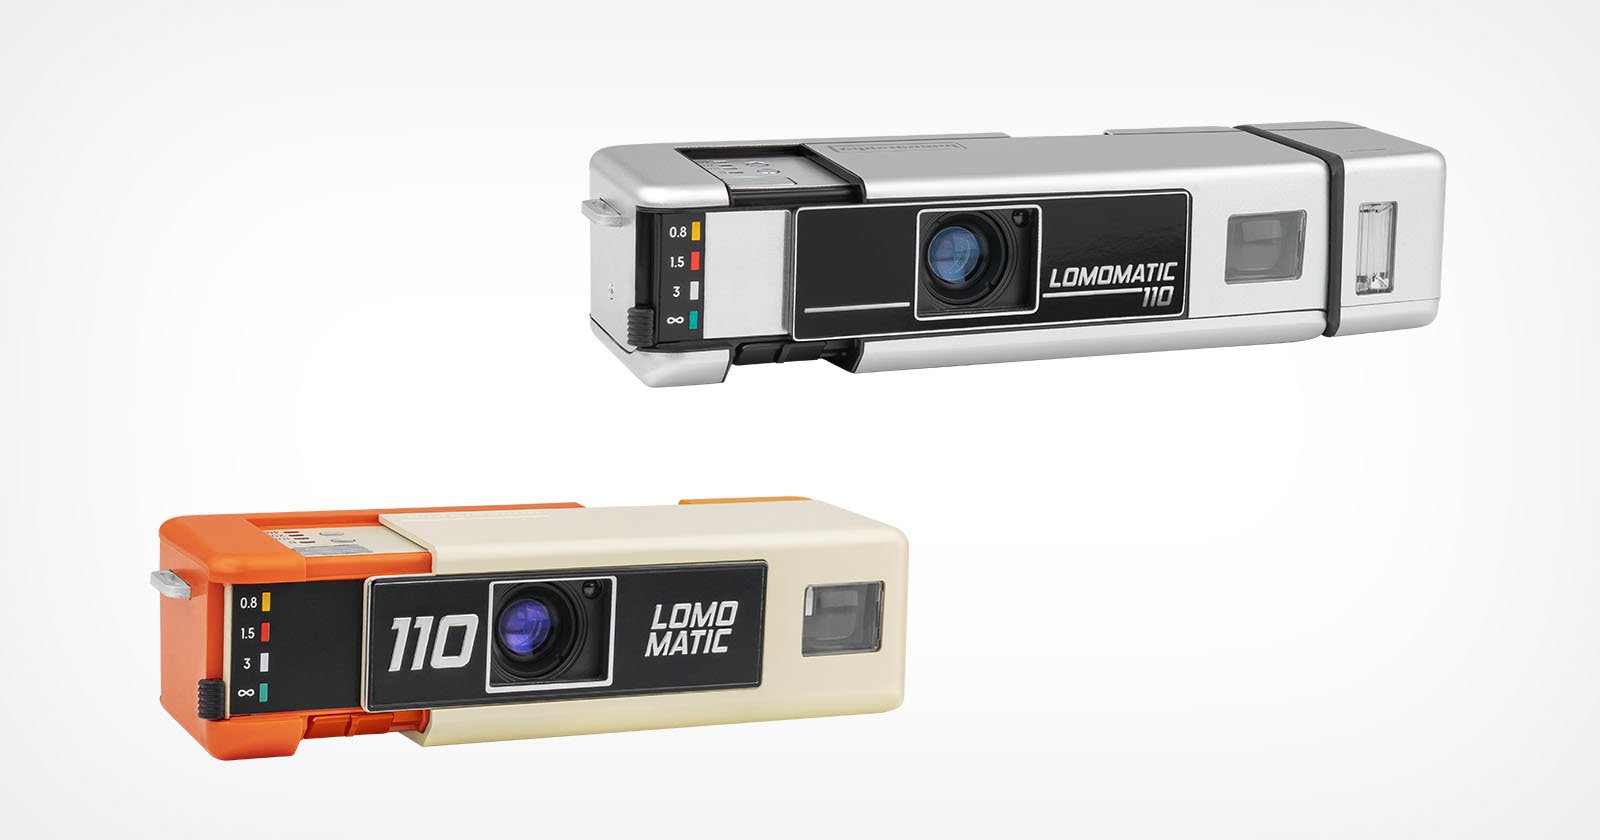  lomography lomomatic 110 film camera slips right into 